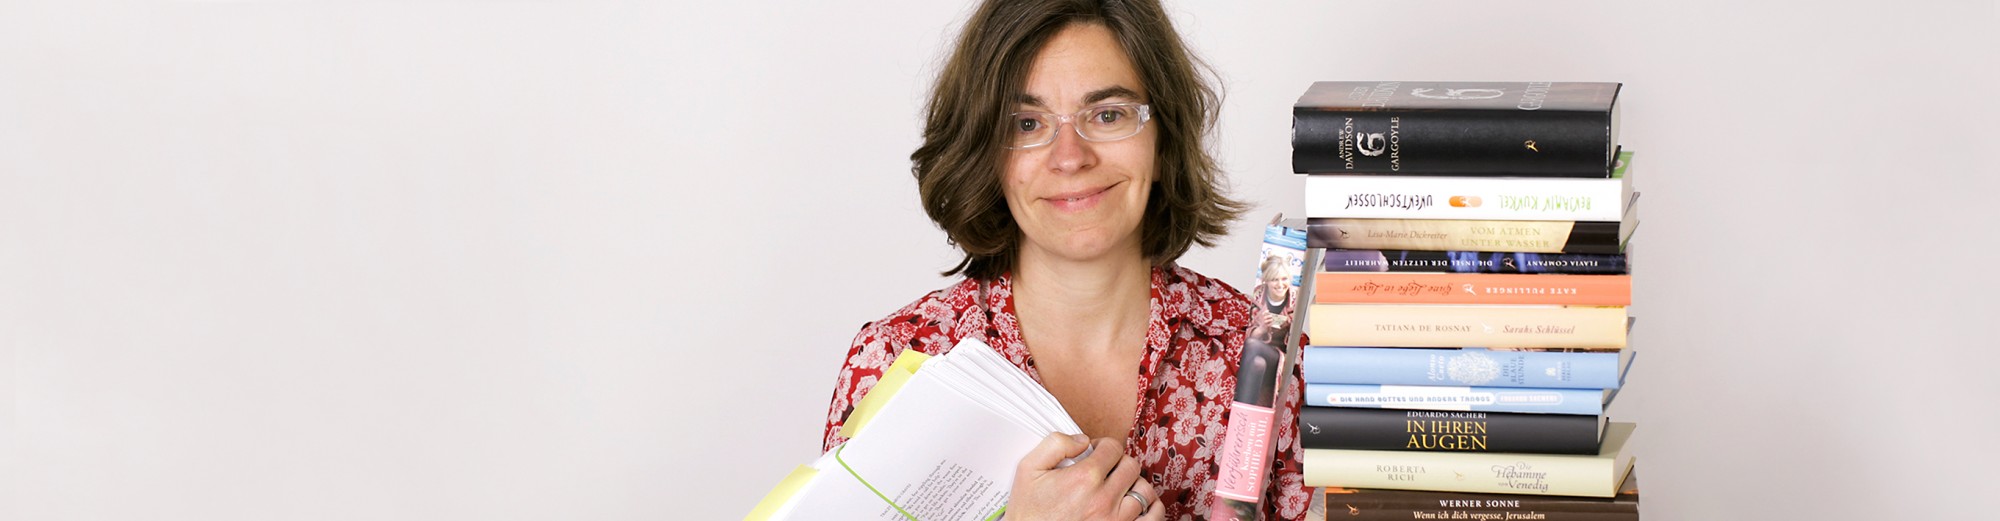 Dr. Ann-Catherine Geuder